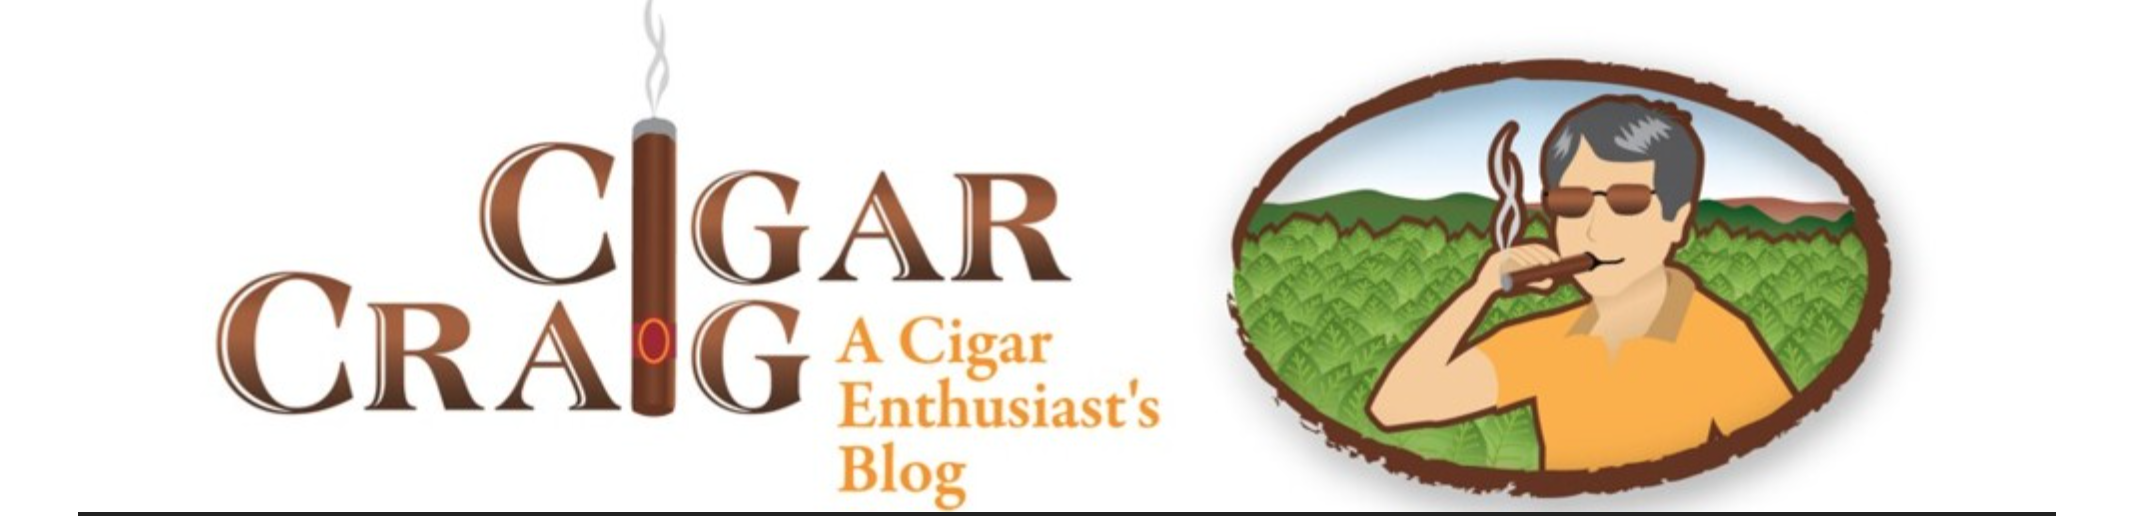 CigarCraig banner.png